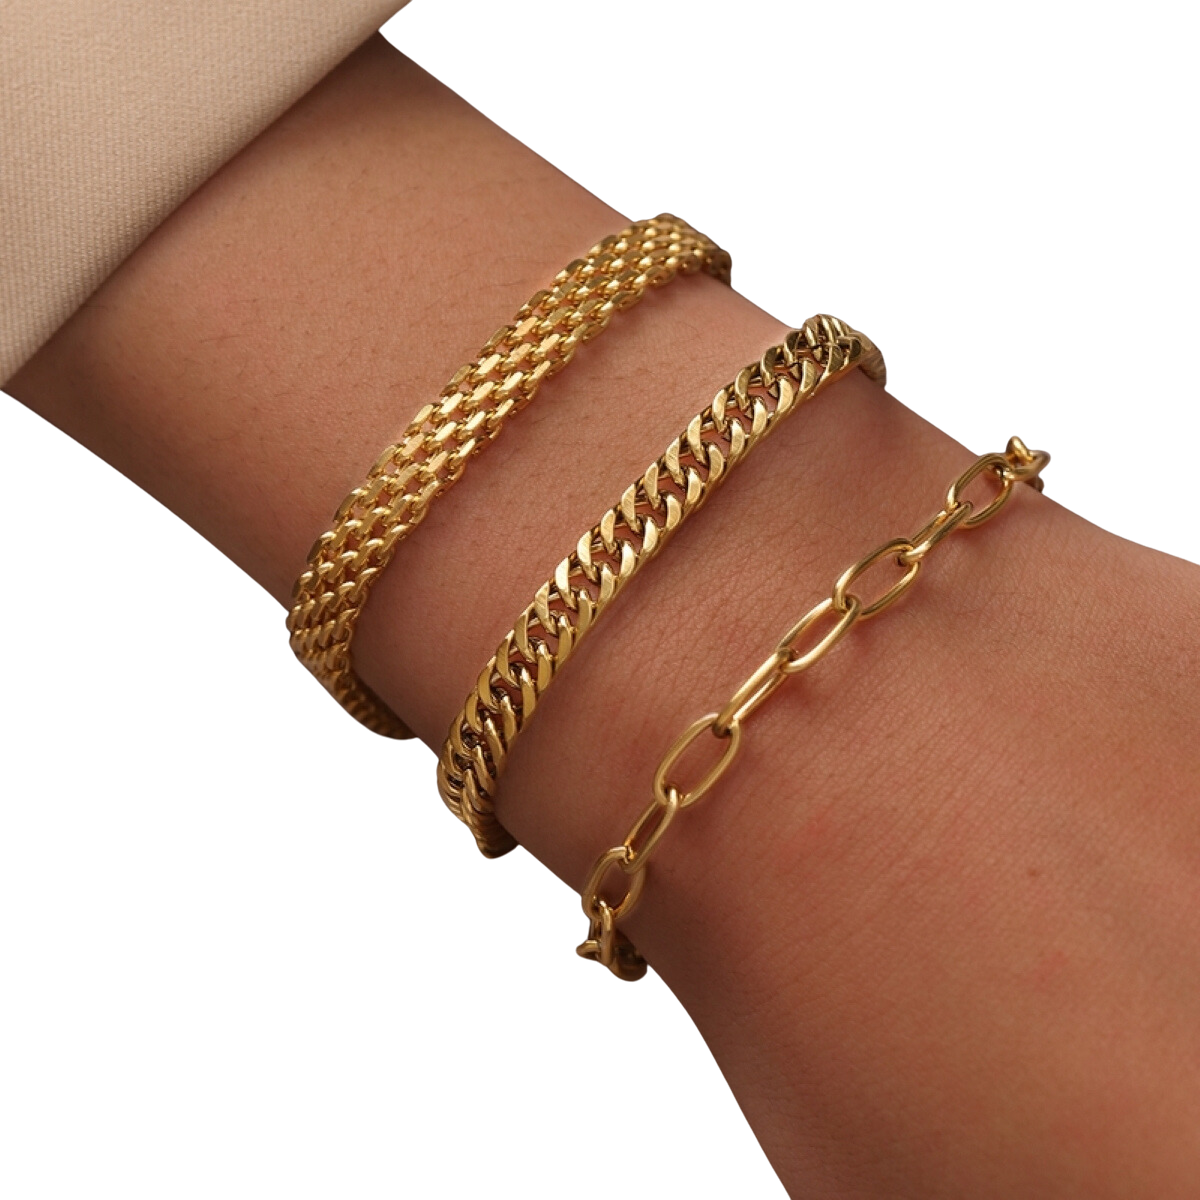 10pcs - Fashionable Three Layers Gold Tone Women Chain Bracelet Set|GCJ403|UK seller